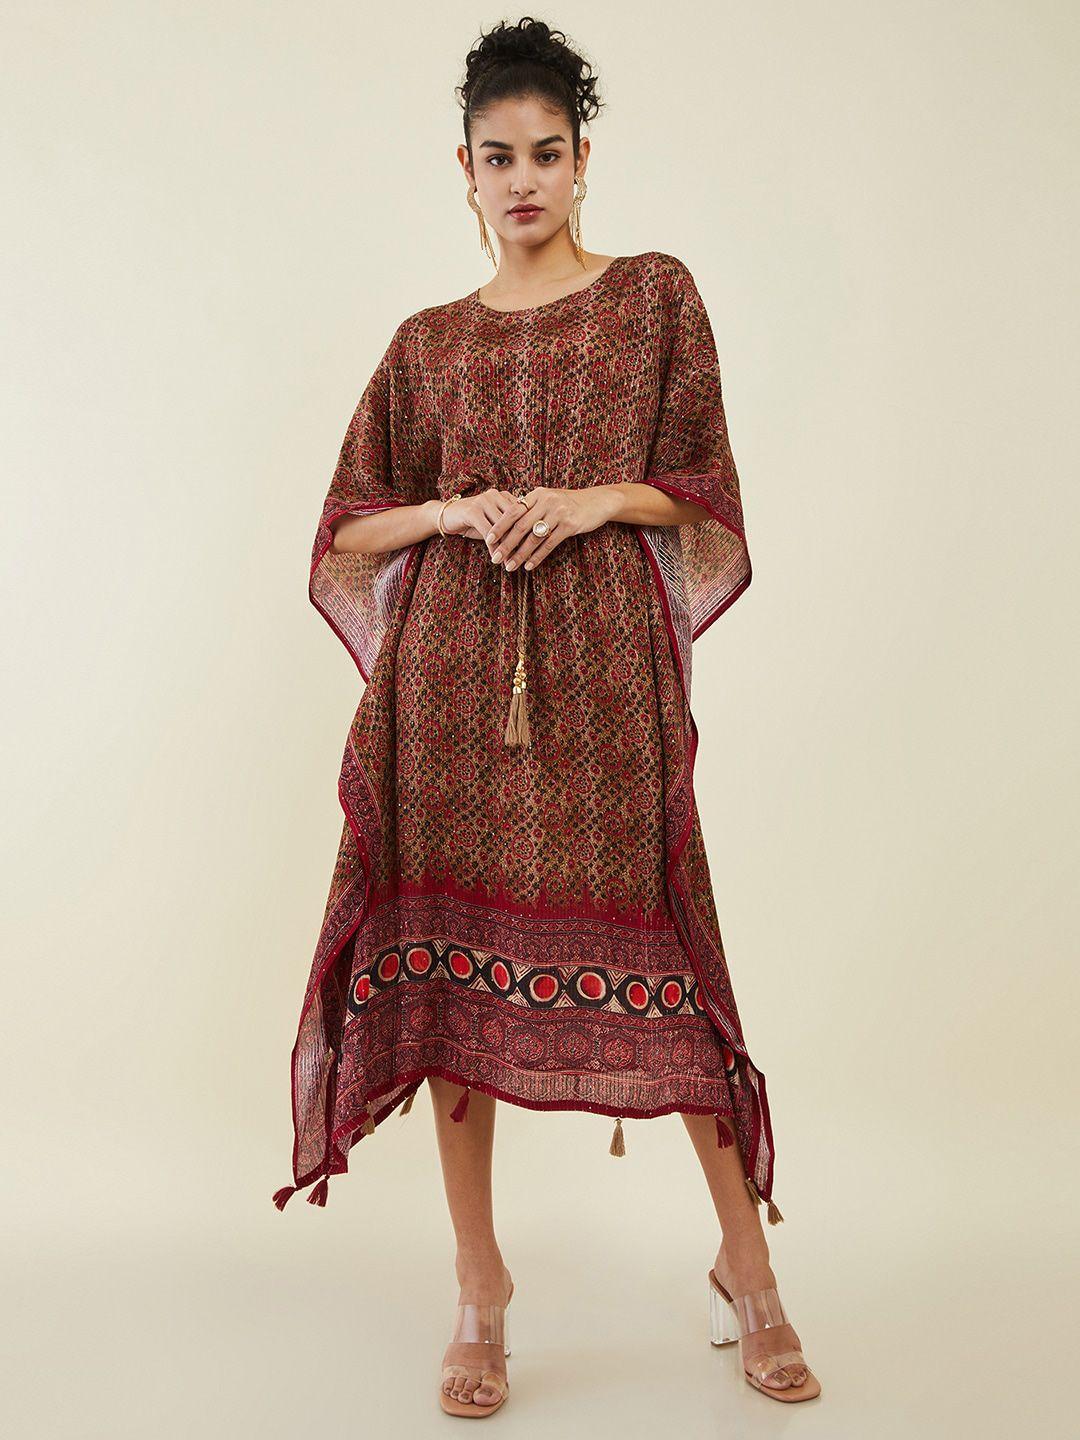 soch-brown-ethnic-motifs-printed-sequined-kaftan-midi-ethnic-dress